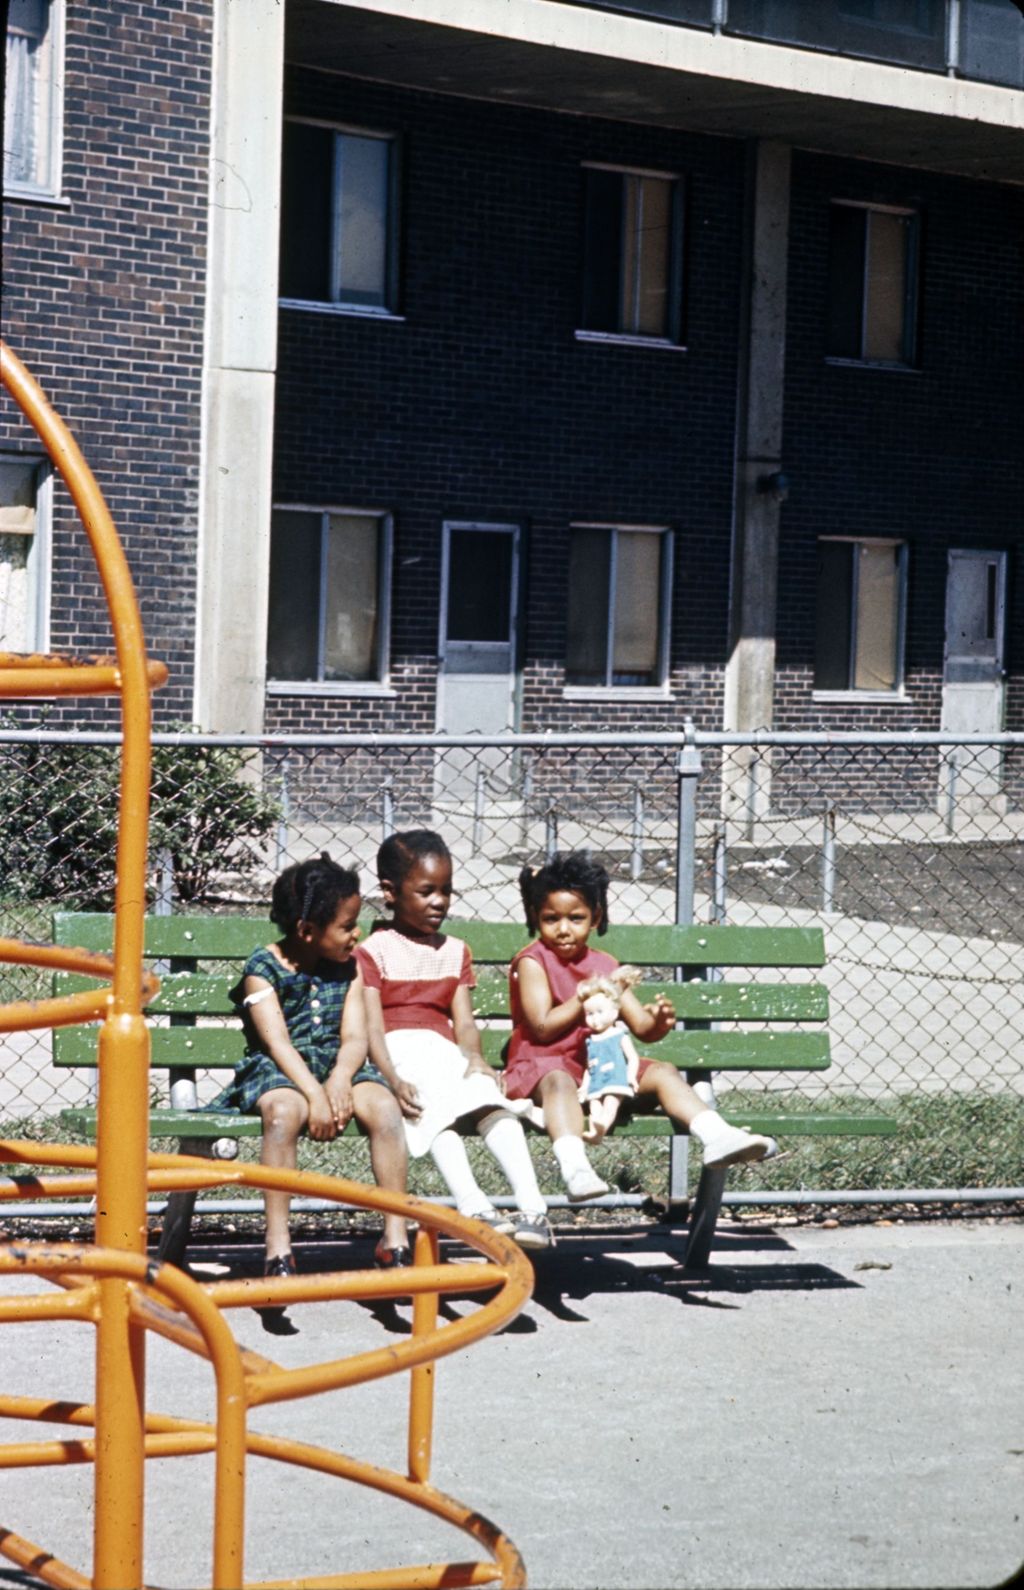 Miniature of Children in playground next to apartment building